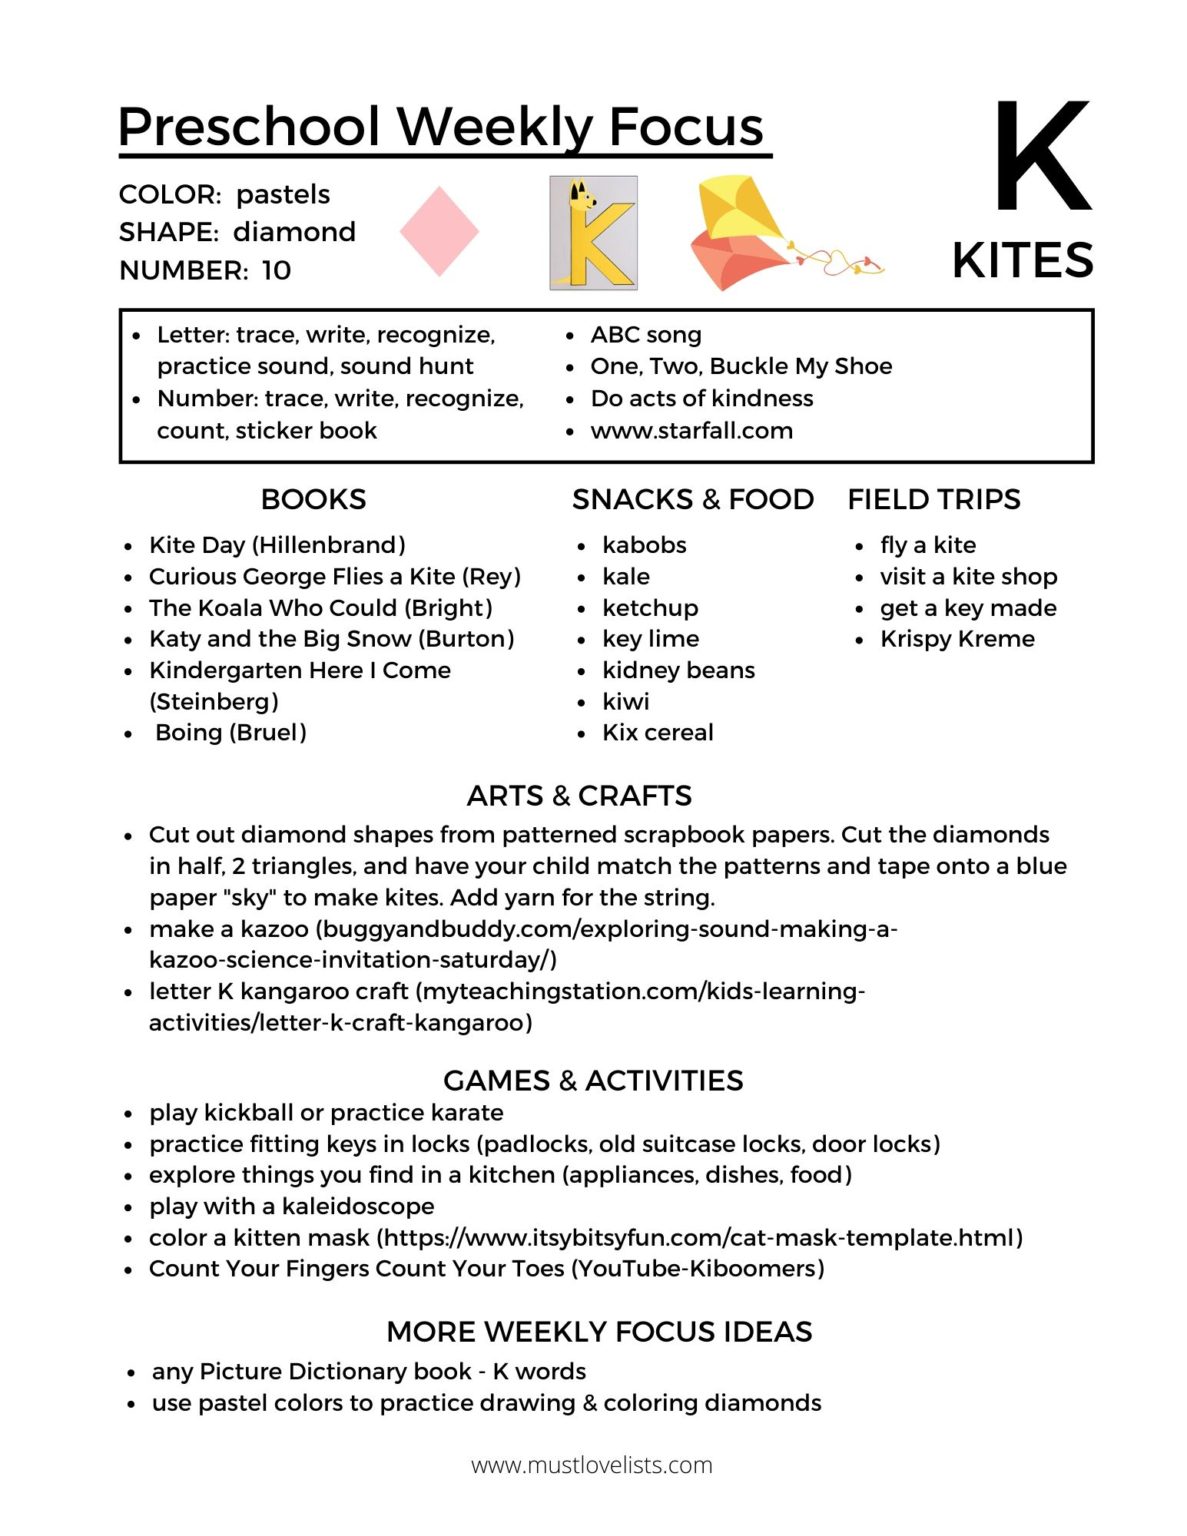 Preschool Letter of the Week: K is for Kites